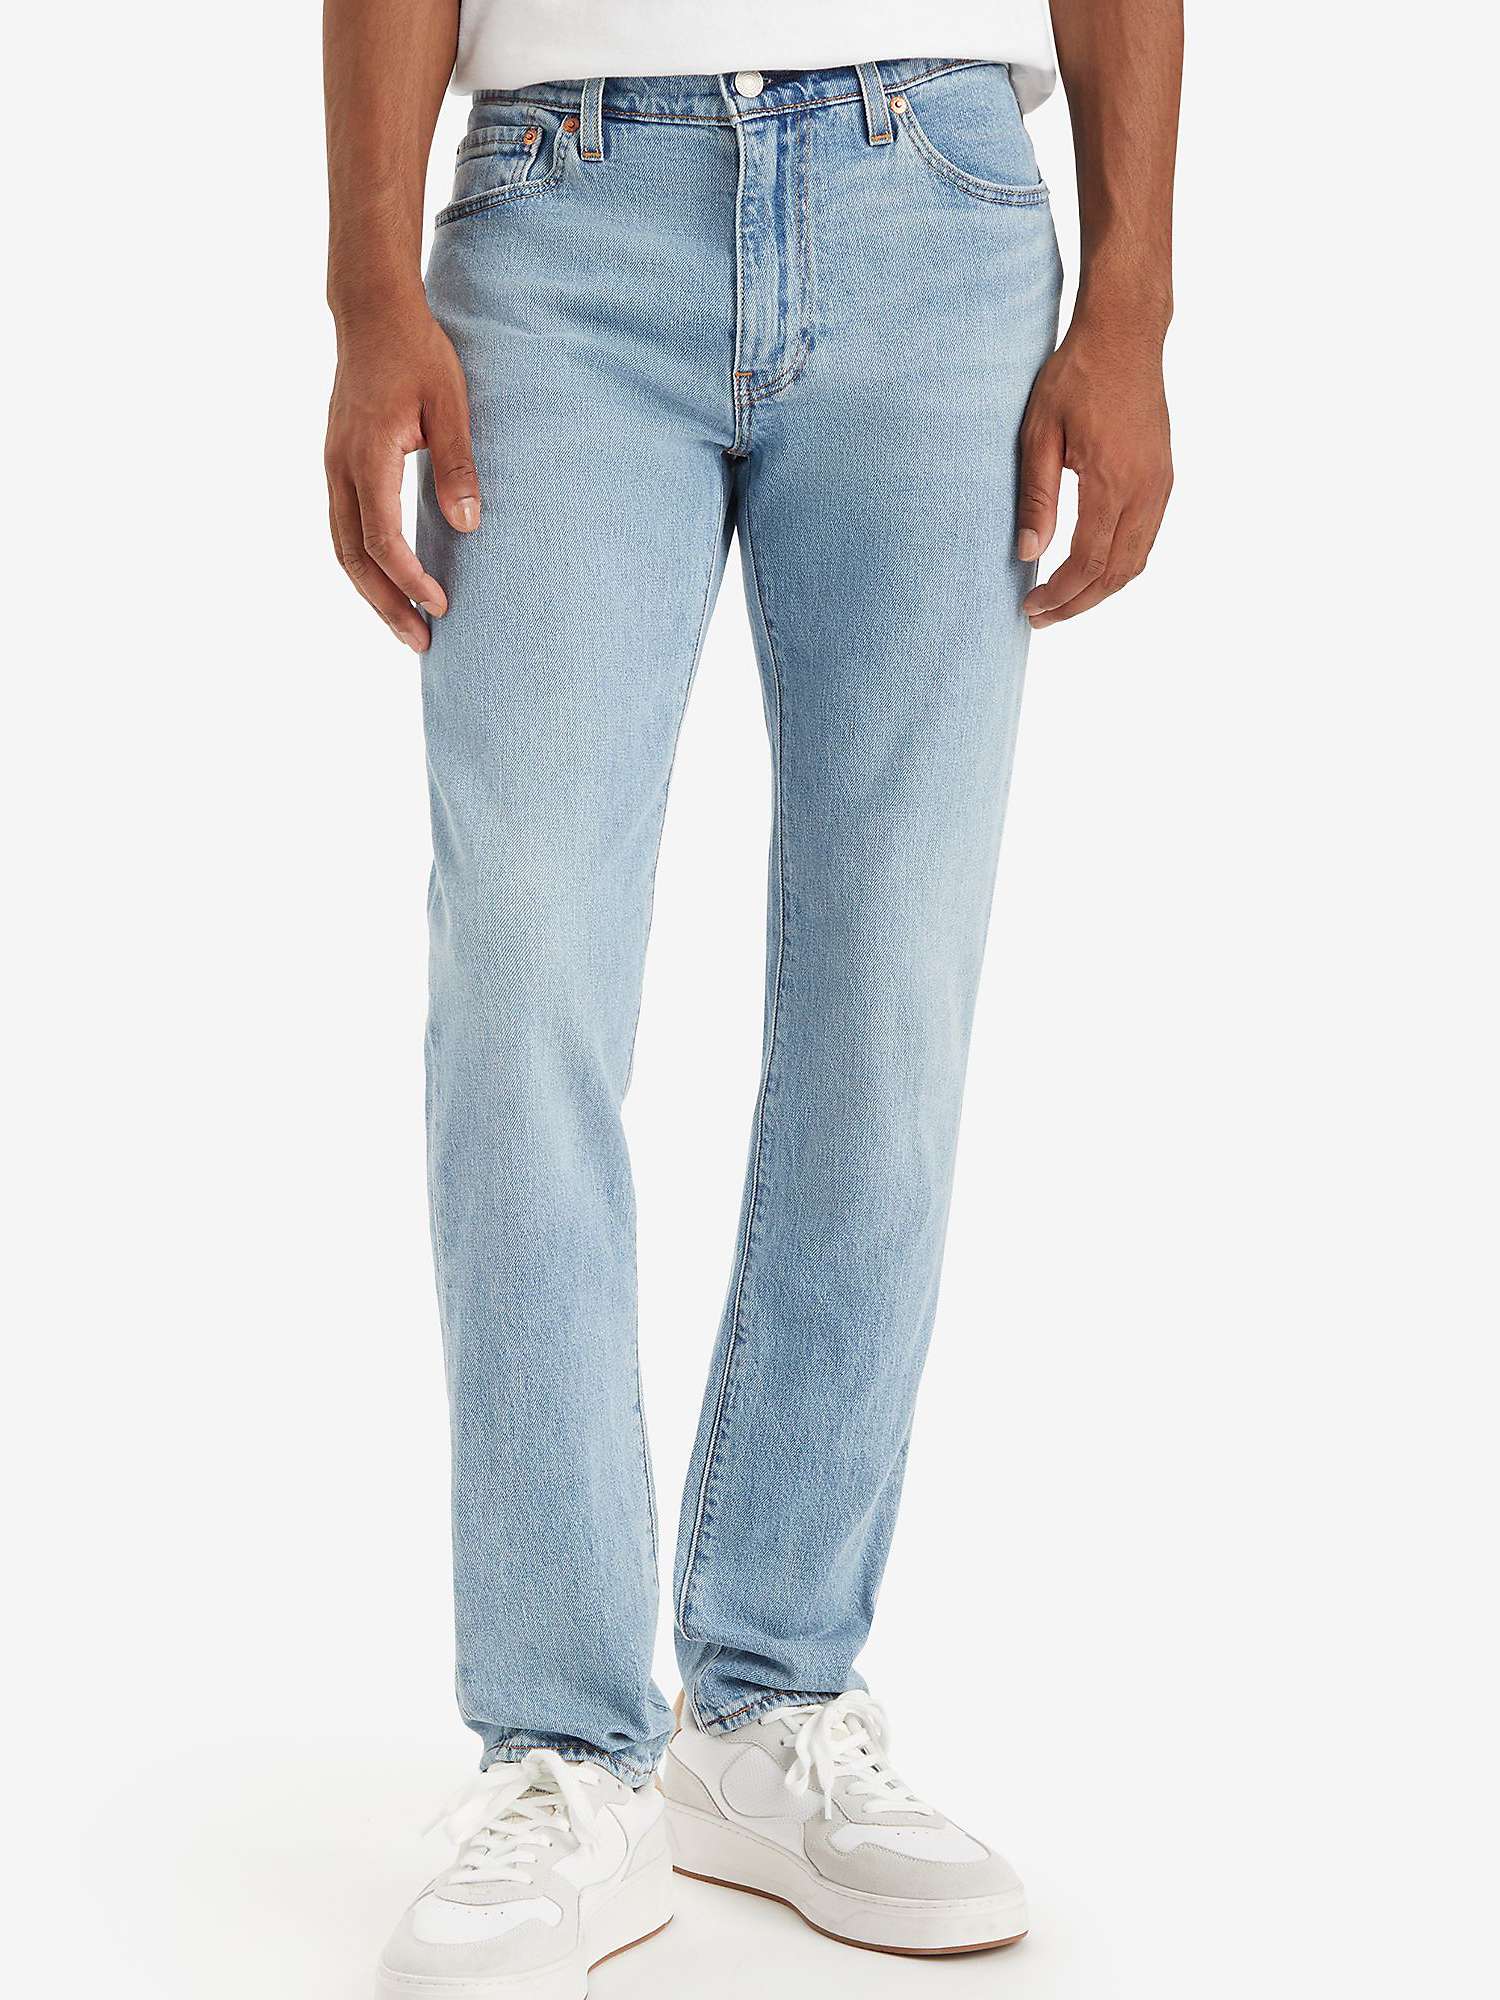 Buy Levi's 511 Original Slim Jeans, Blue Online at johnlewis.com